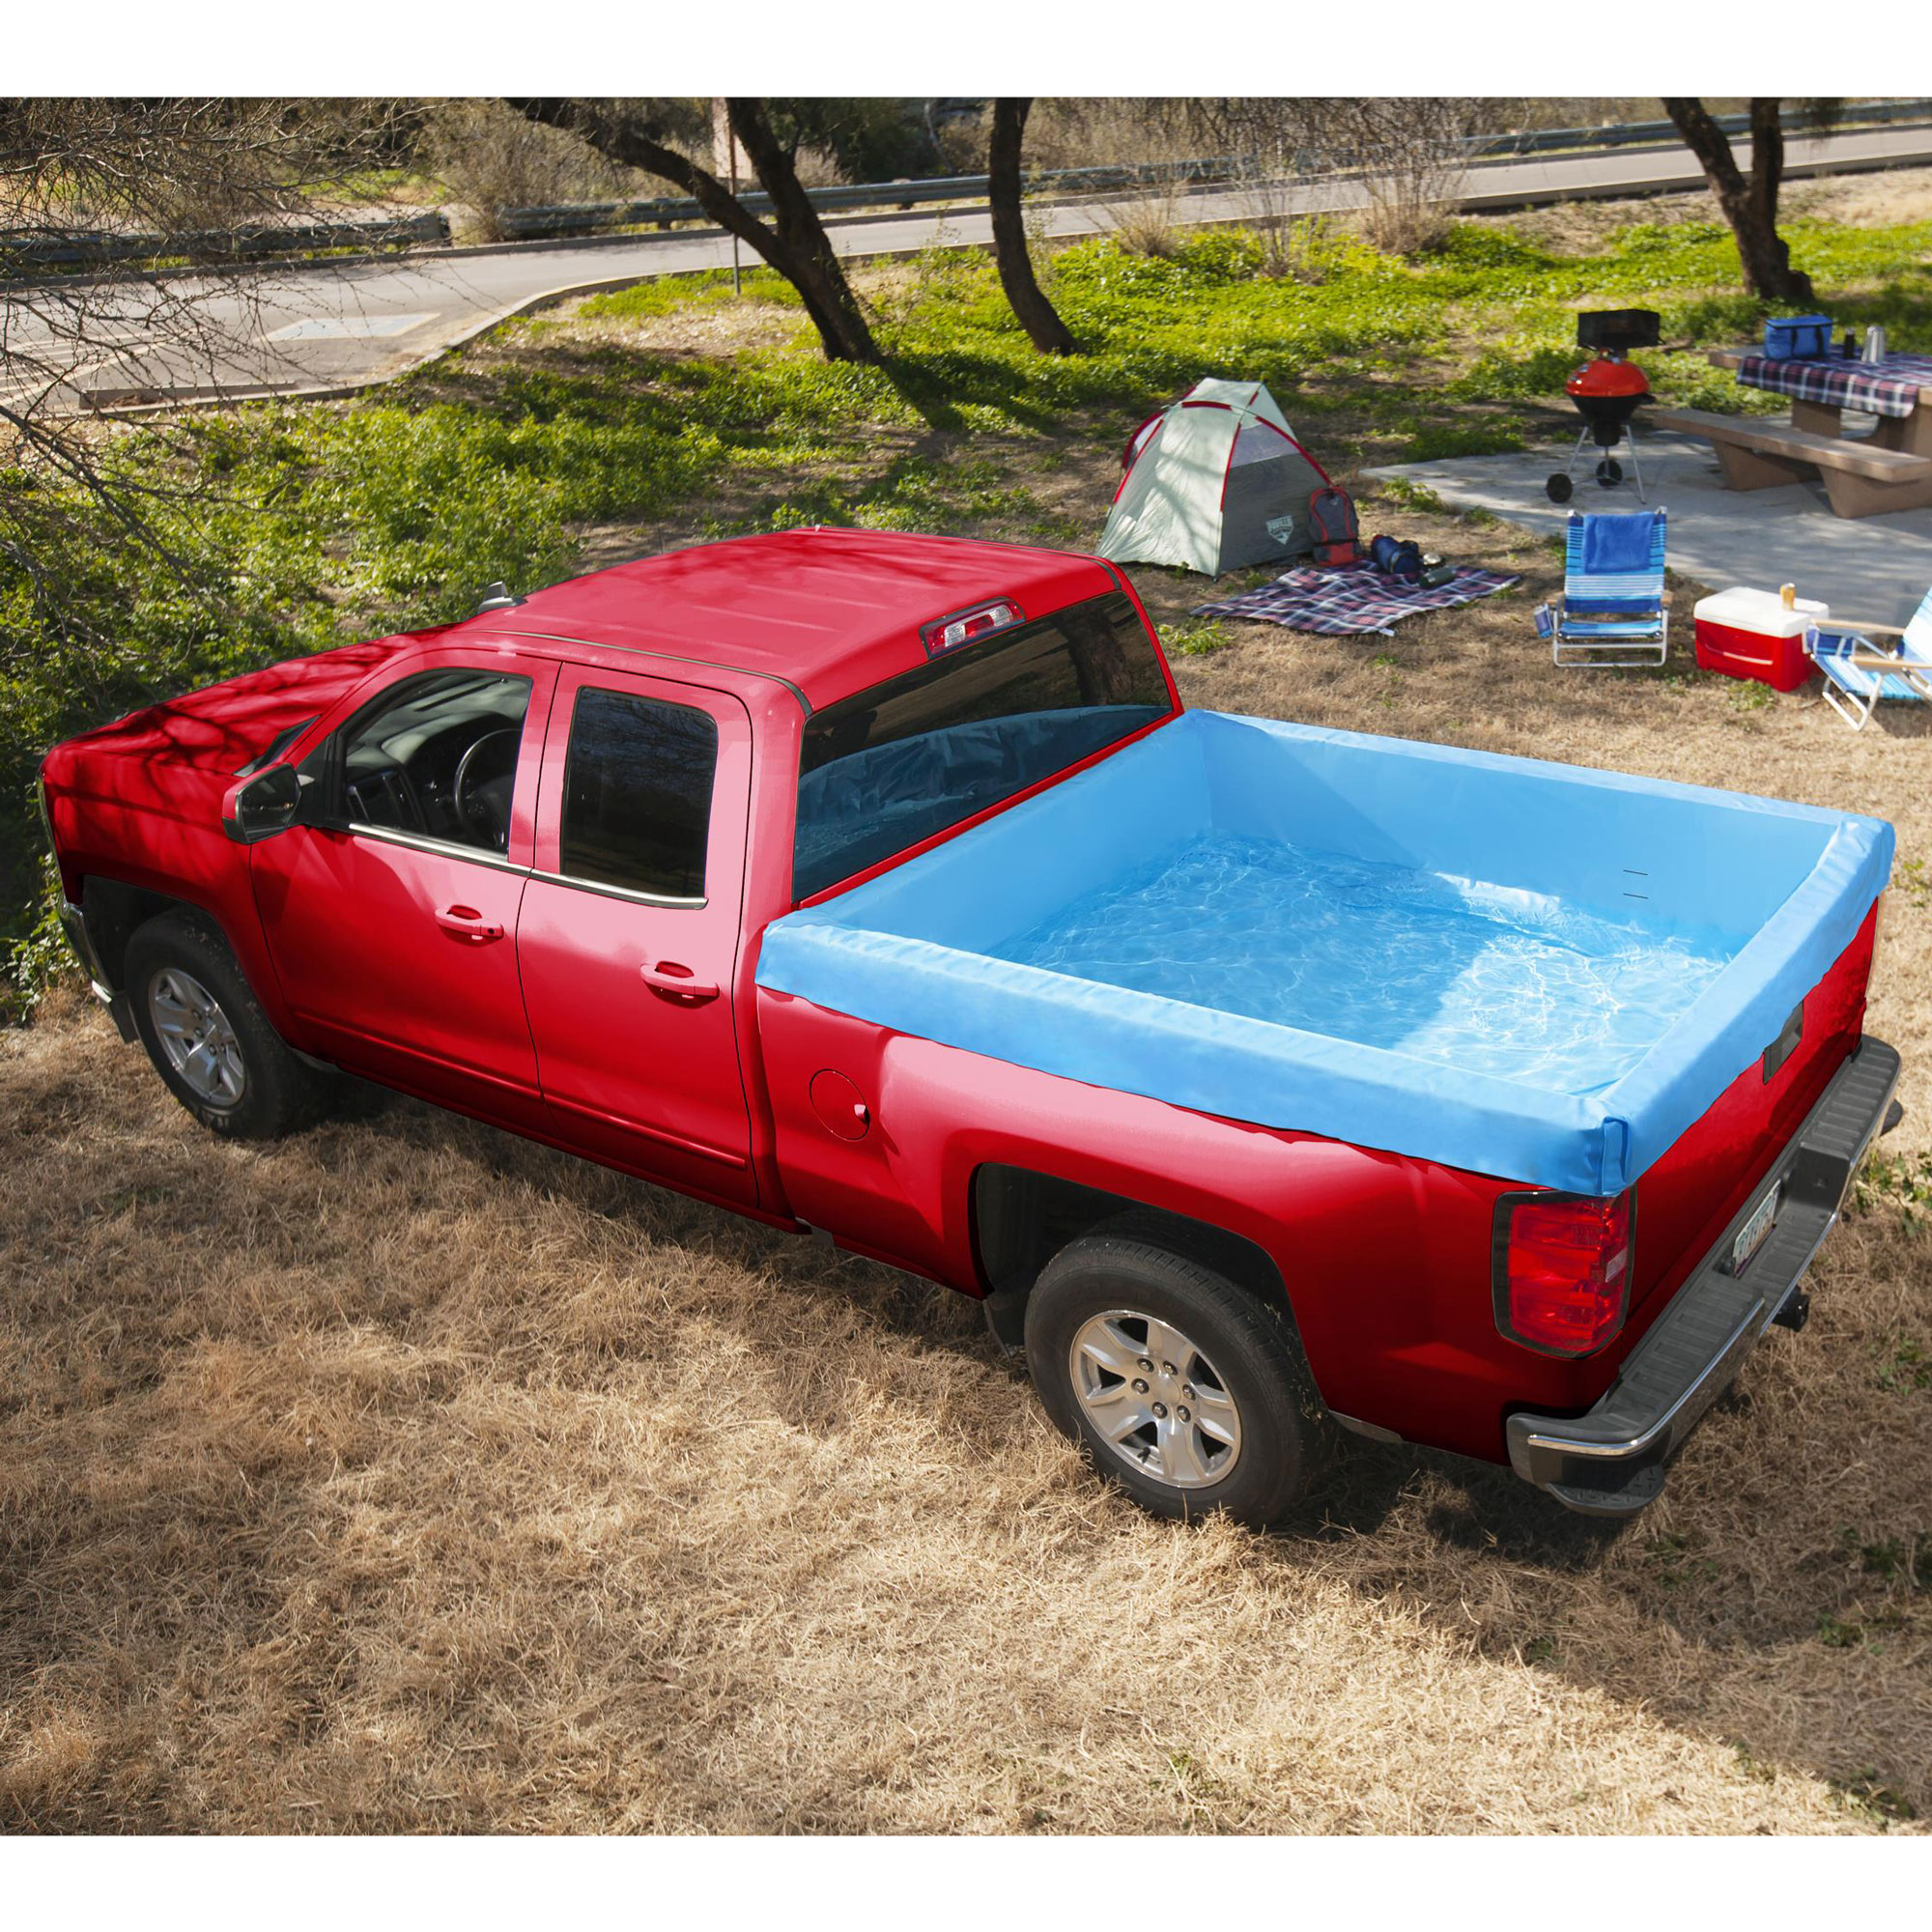 Bestway Portable Standard 55 Foot Payload Pickup Truck Bed Swimming Pool Used 821808542833 Ebay